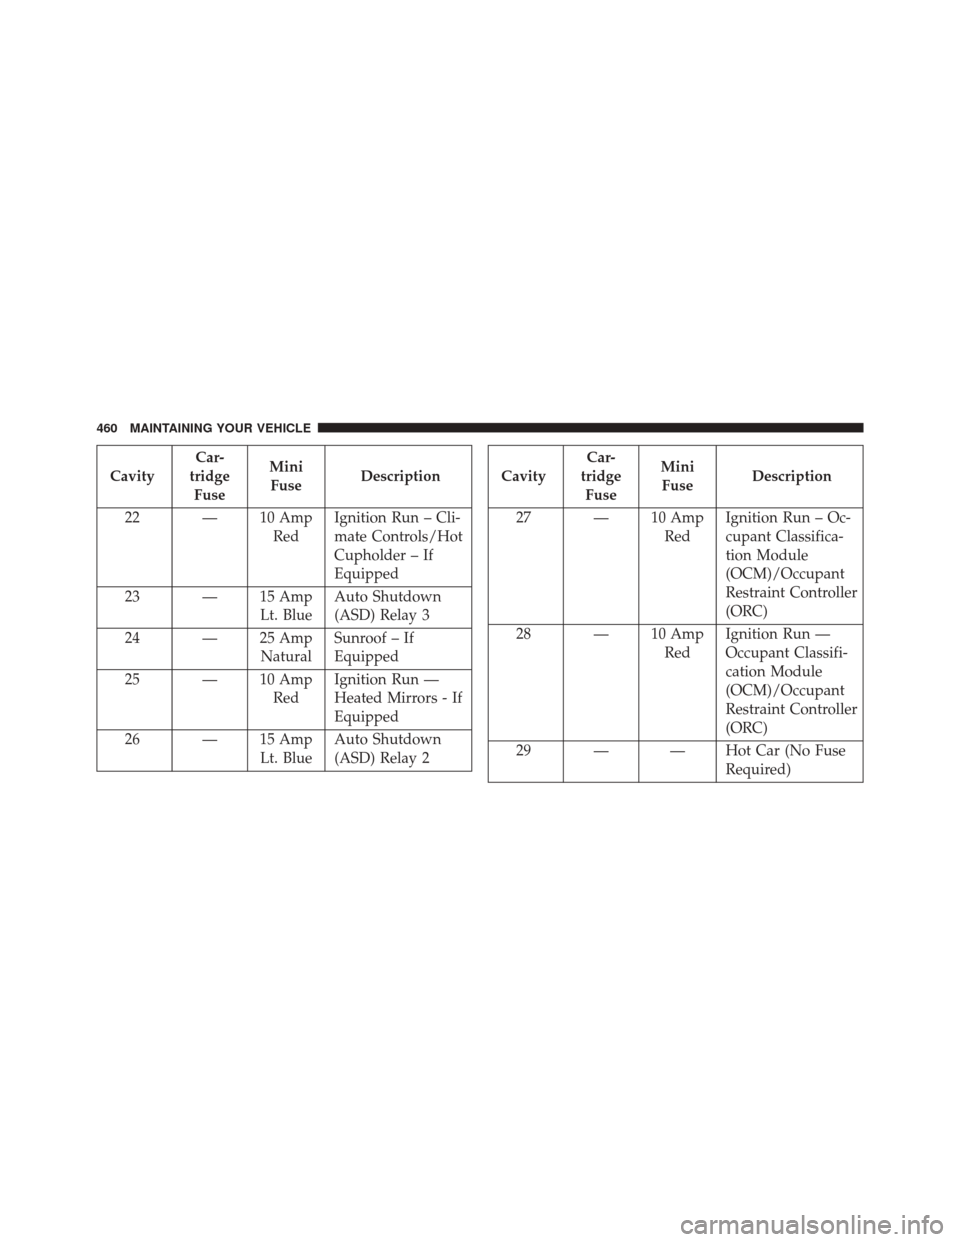 CHRYSLER 200 2014 1.G Owners Manual CavityCar-
tridge Fuse Mini
Fuse Description
22 — 10 Amp RedIgnition Run – Cli-
mate Controls/Hot
Cupholder – If
Equipped
23 — 15 Amp Lt. BlueAuto Shutdown
(ASD) Relay 3
24 — 25 Amp NaturalS